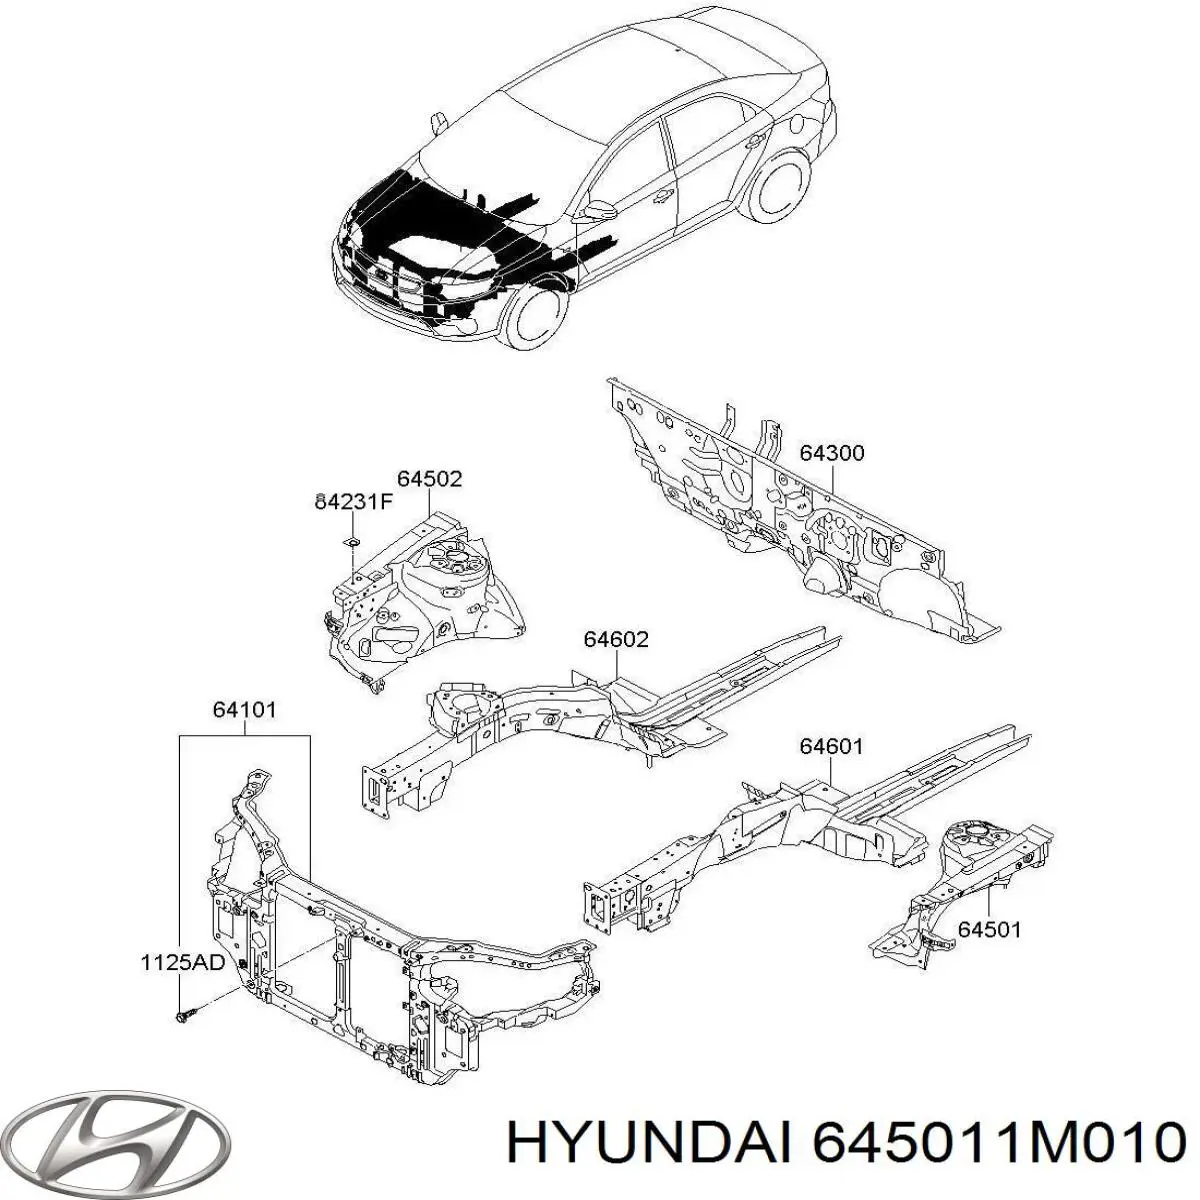 645011M010 Hyundai/Kia arco de rueda, panel lateral, izquierdo